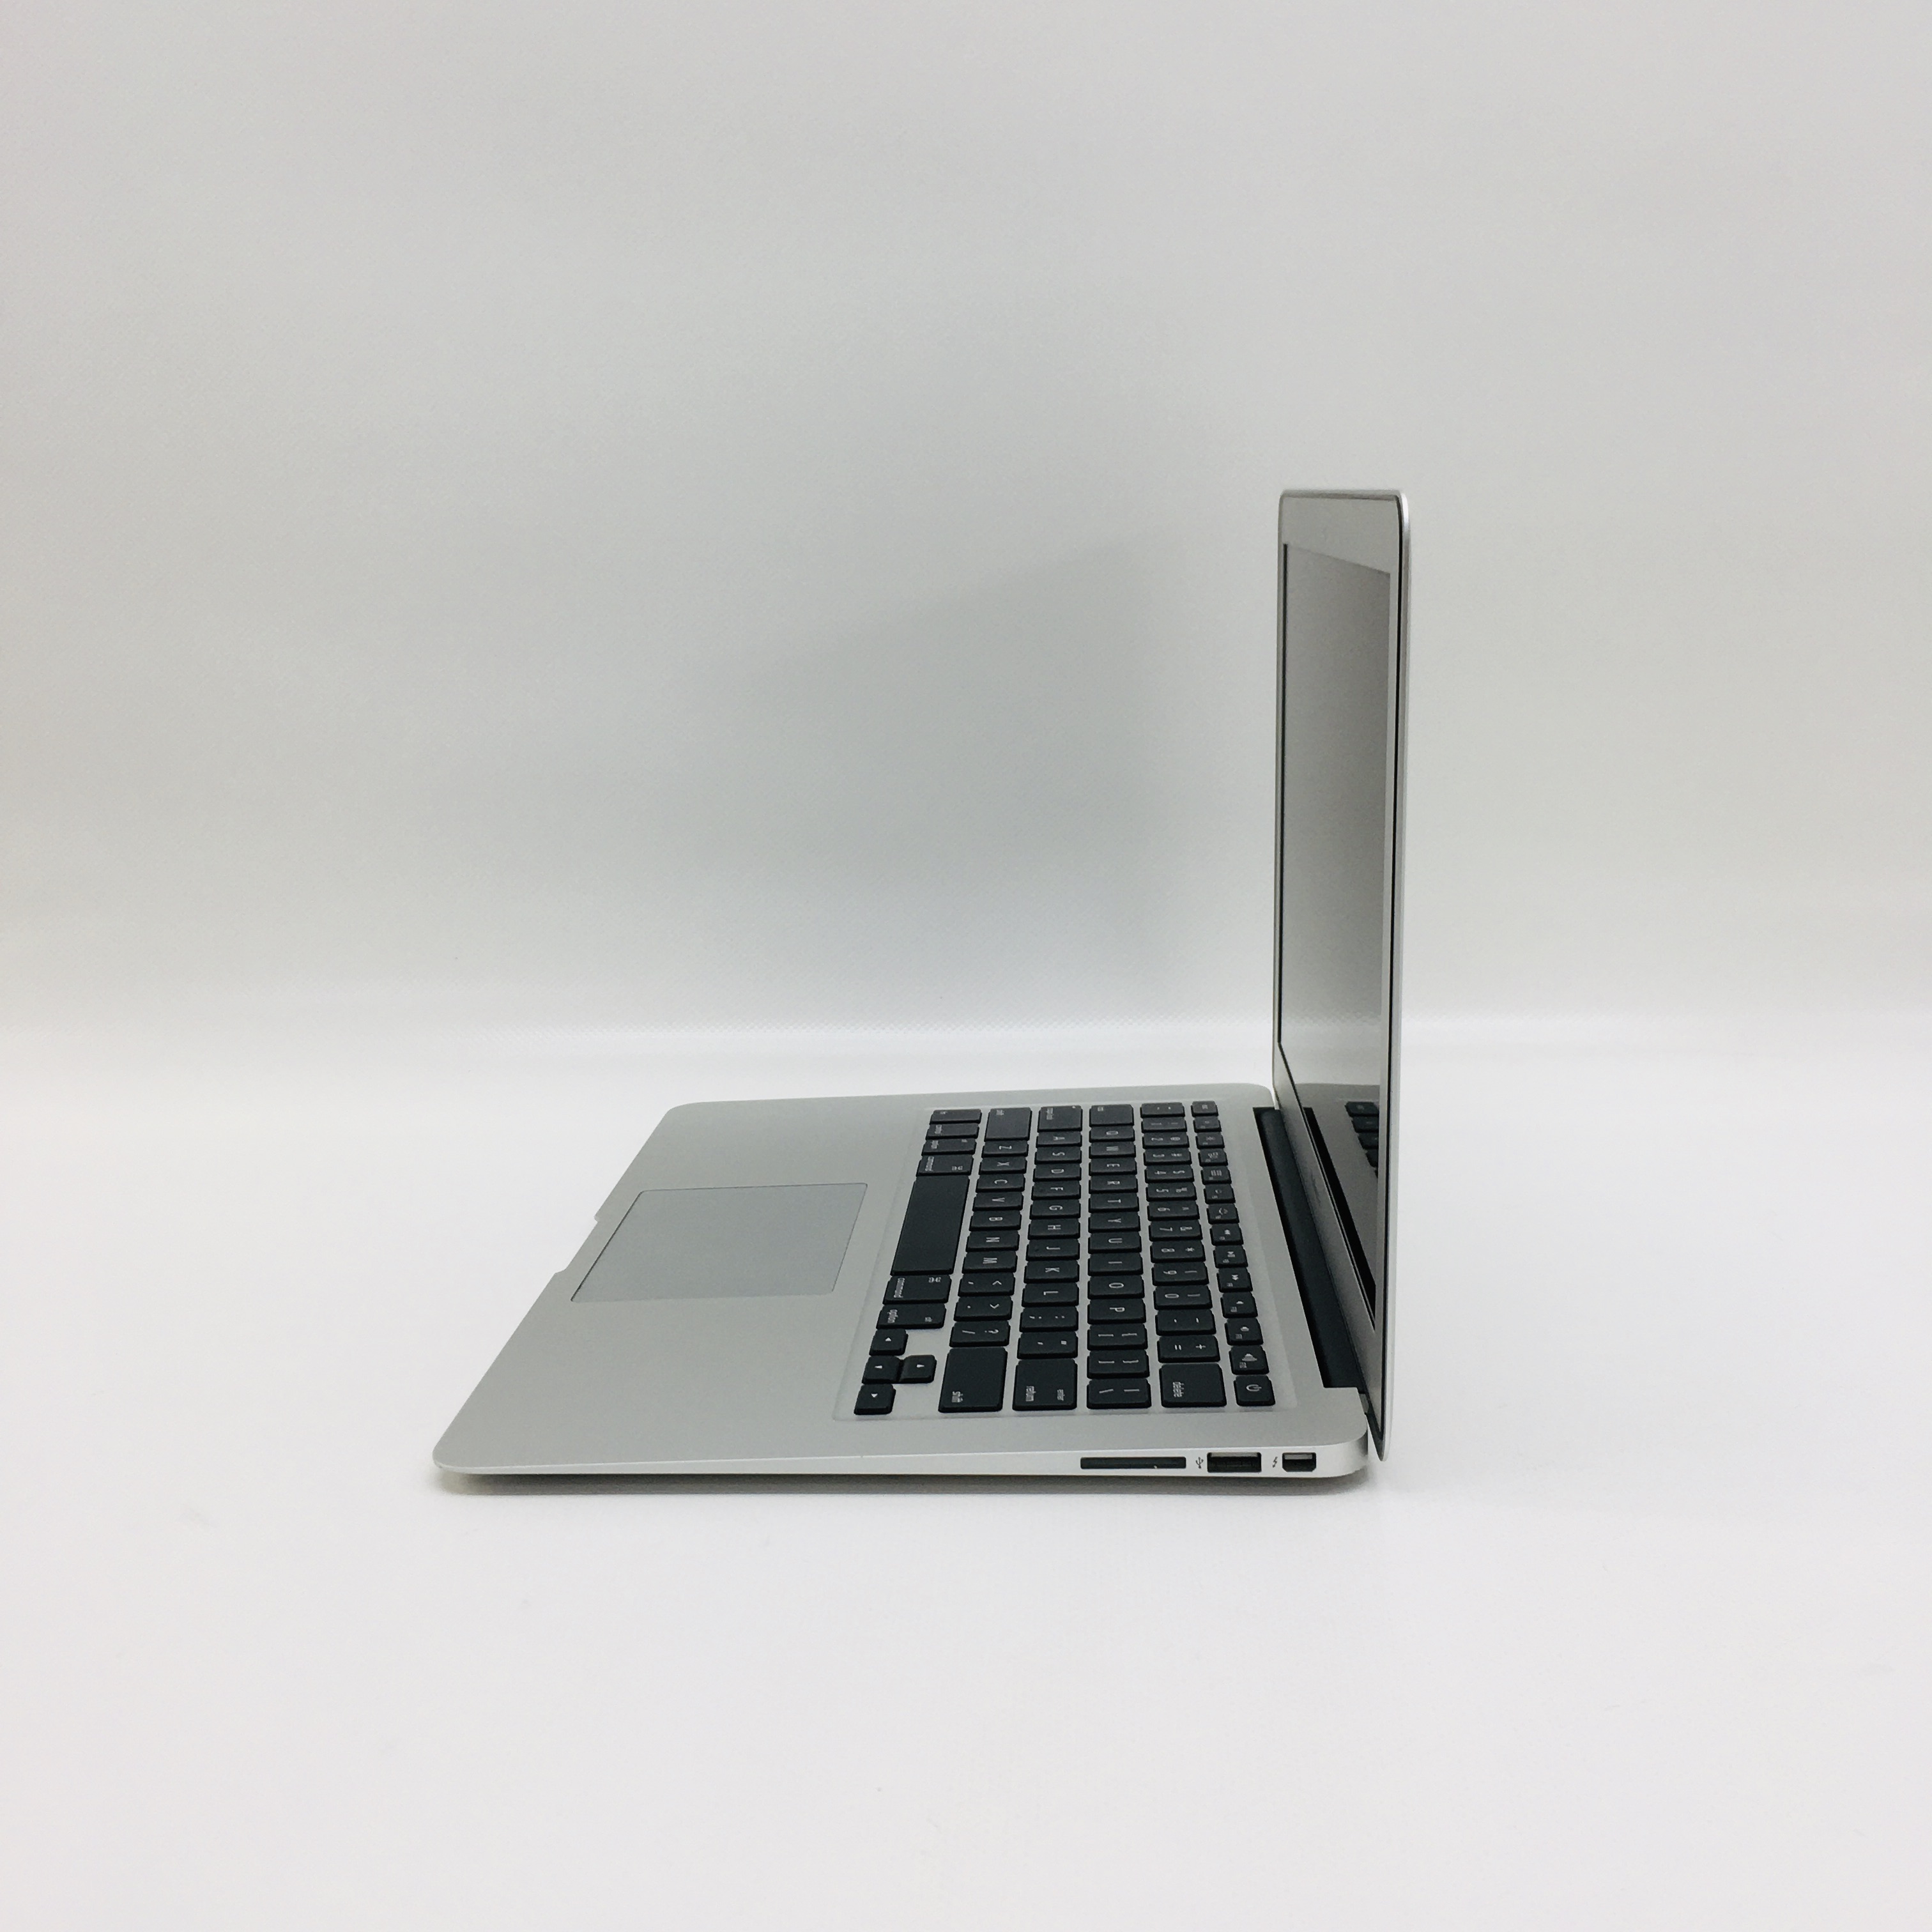 MacBook Air 13" Early 2015 (Intel Core i5 1.6 GHz 8 GB RAM 256 GB SSD), Intel Core i5 1.6 GHz, 8 GB RAM, 256 GB SSD, image 3